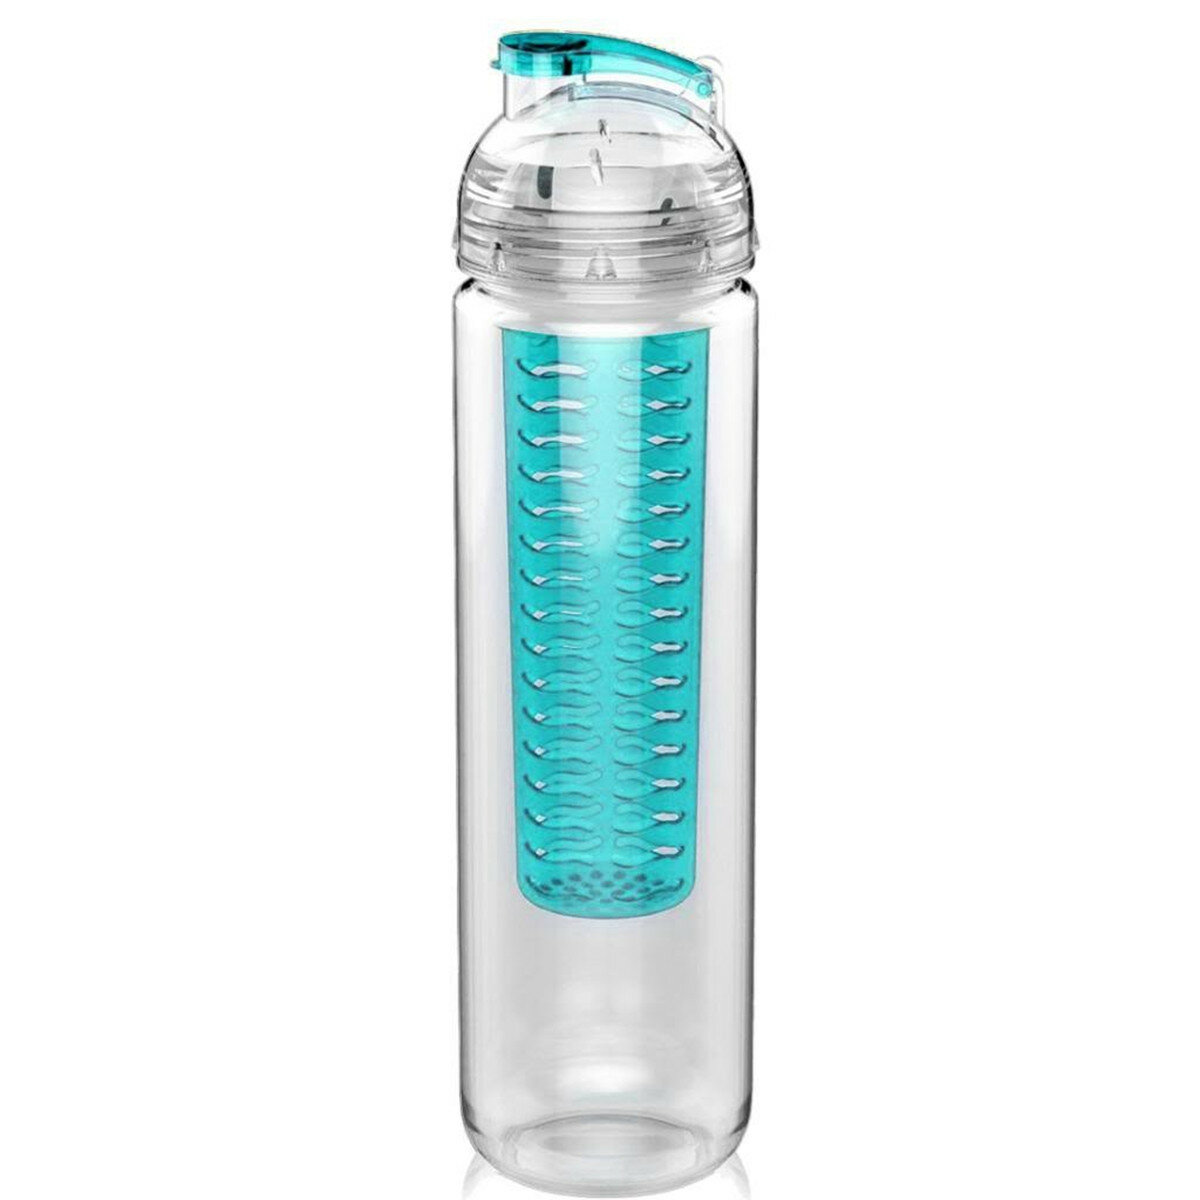 CAMTOA 800MLプラスチック製の水カップ 大容量のフルーツジュースカップ アウトドアポータブルスポーツカップ